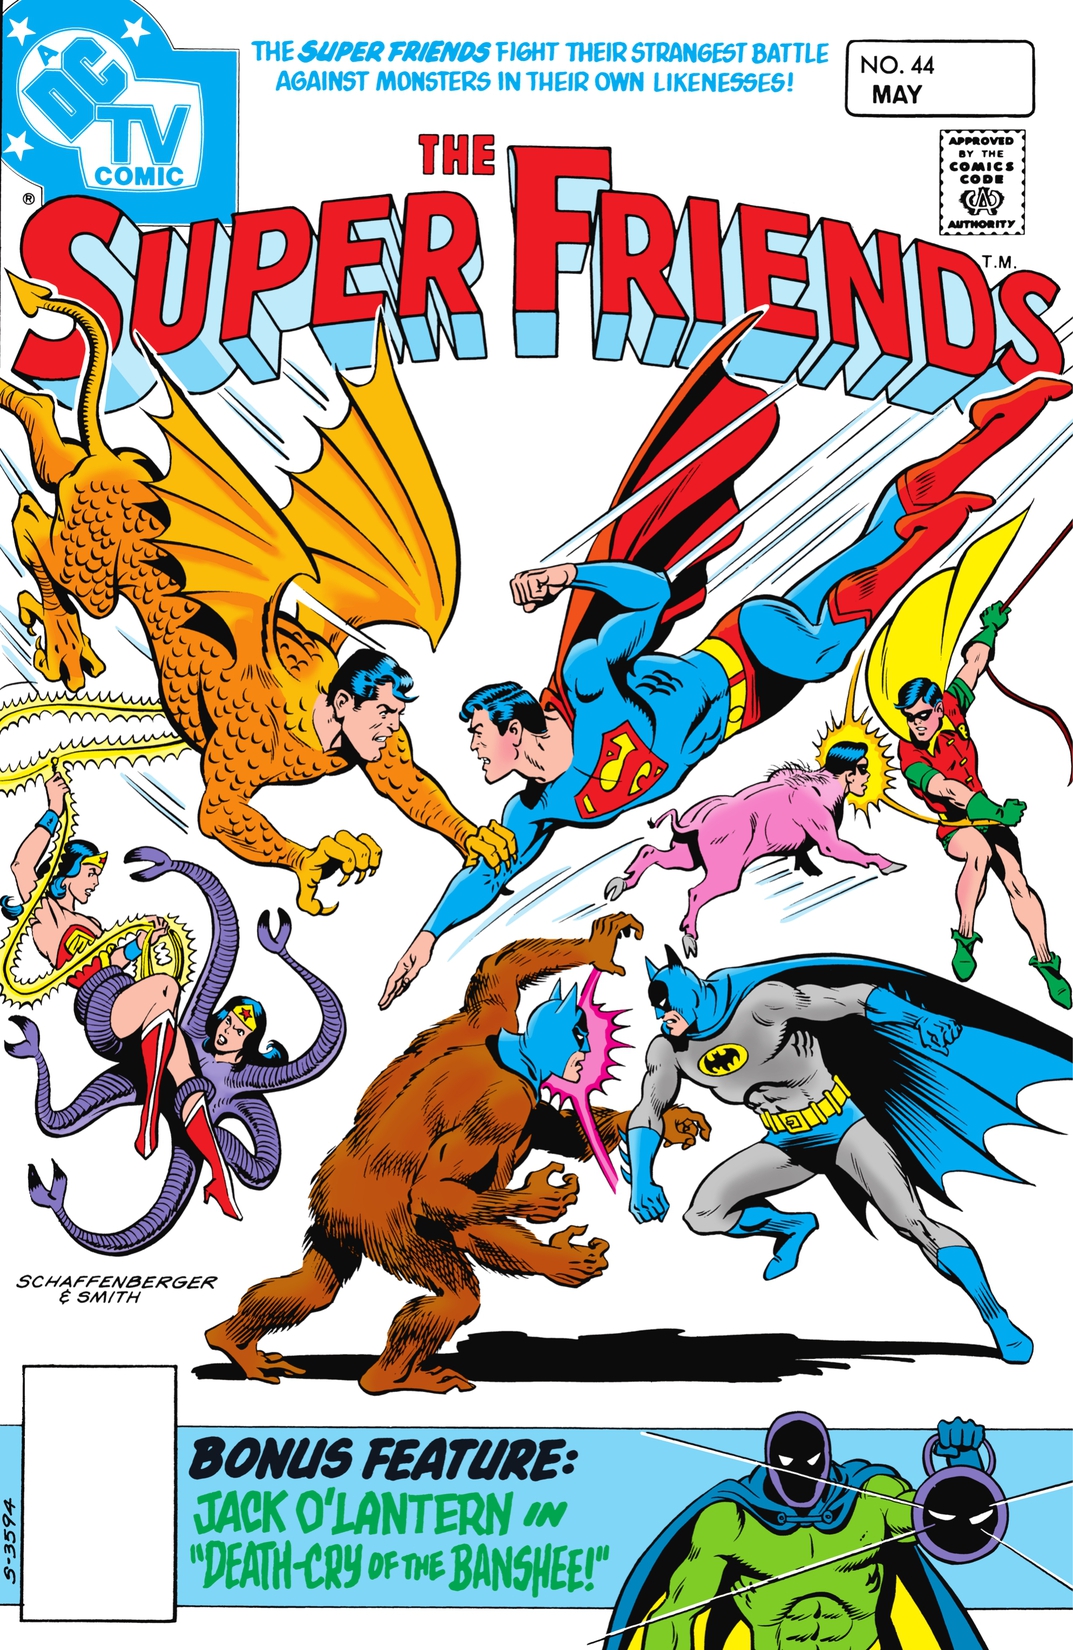 Super Friends (1976-1981) #44 preview images